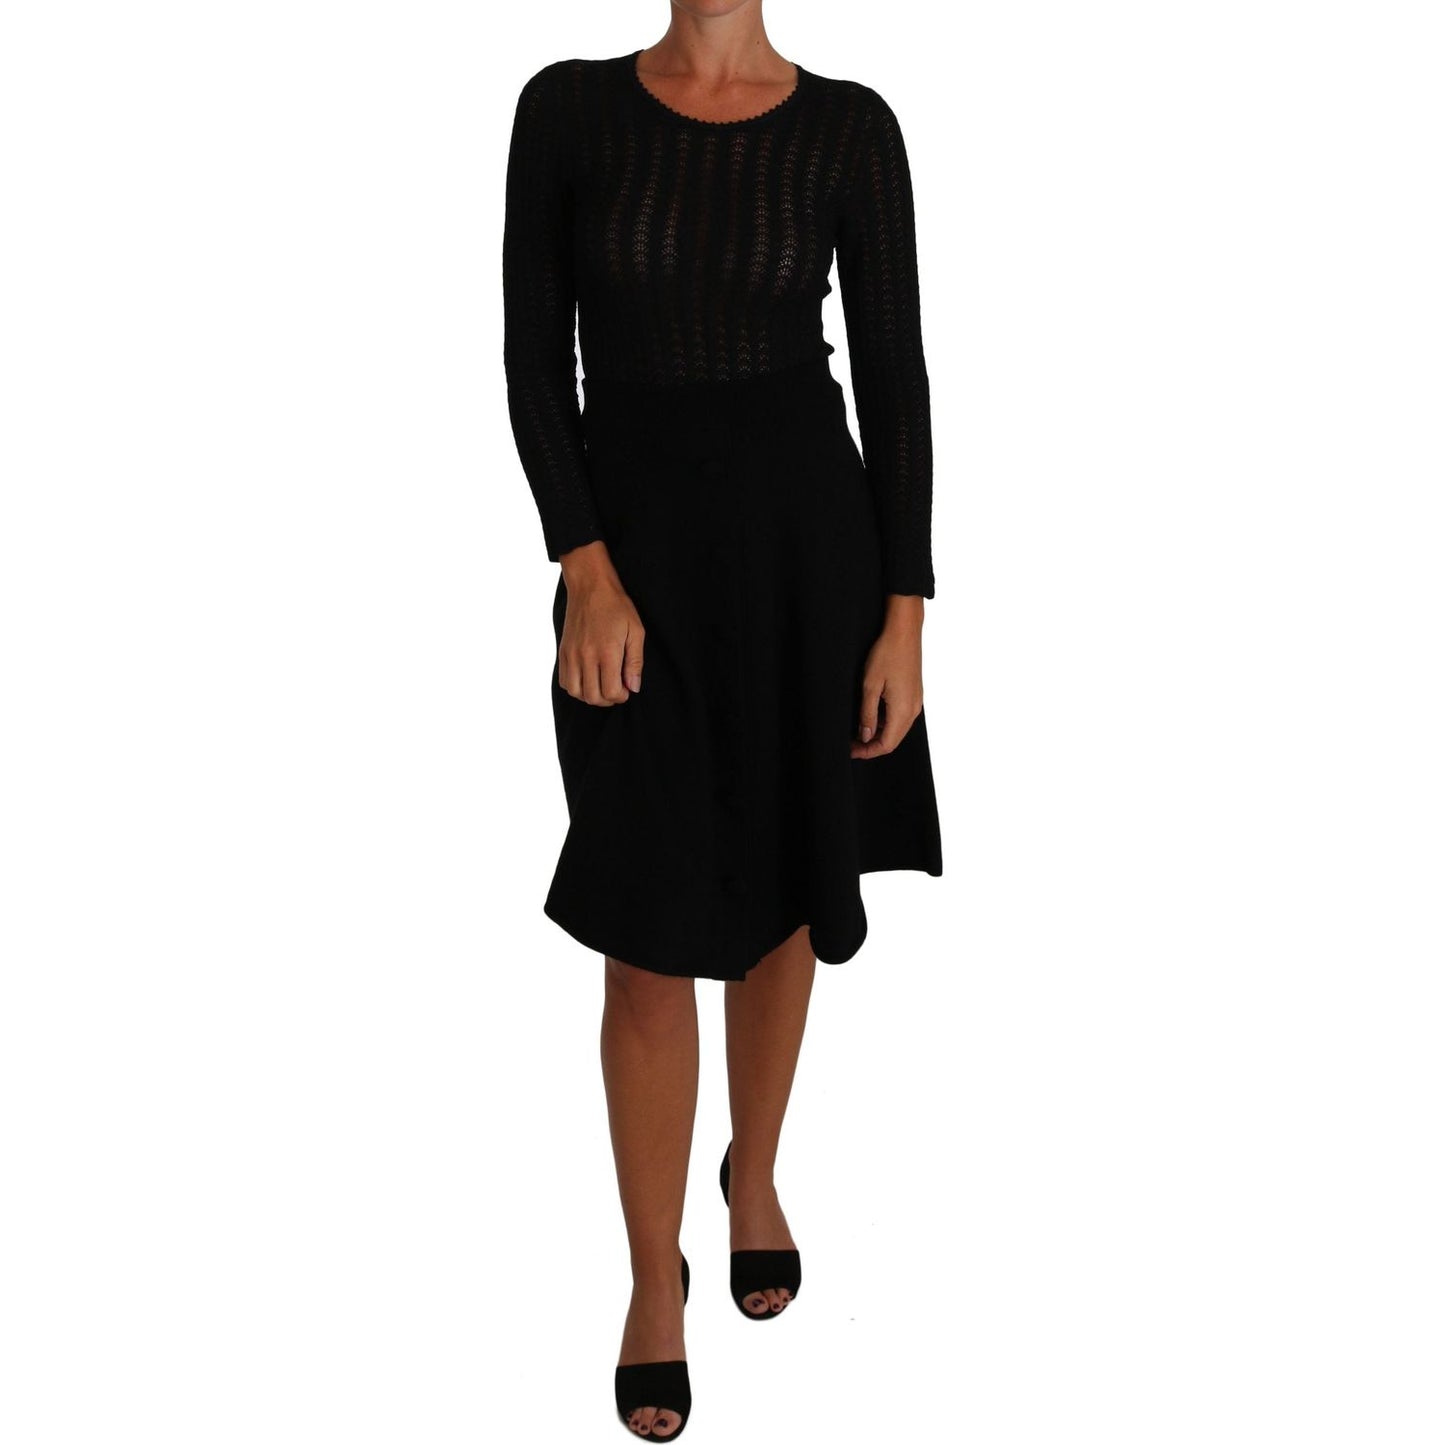 Dolce & Gabbana Elegant Black Knitted Sheath Dress black-knitted-wool-sheath-long-sleeves-dress 637841-black-knitted-wool-sheath-long-sleeves-dress.jpg